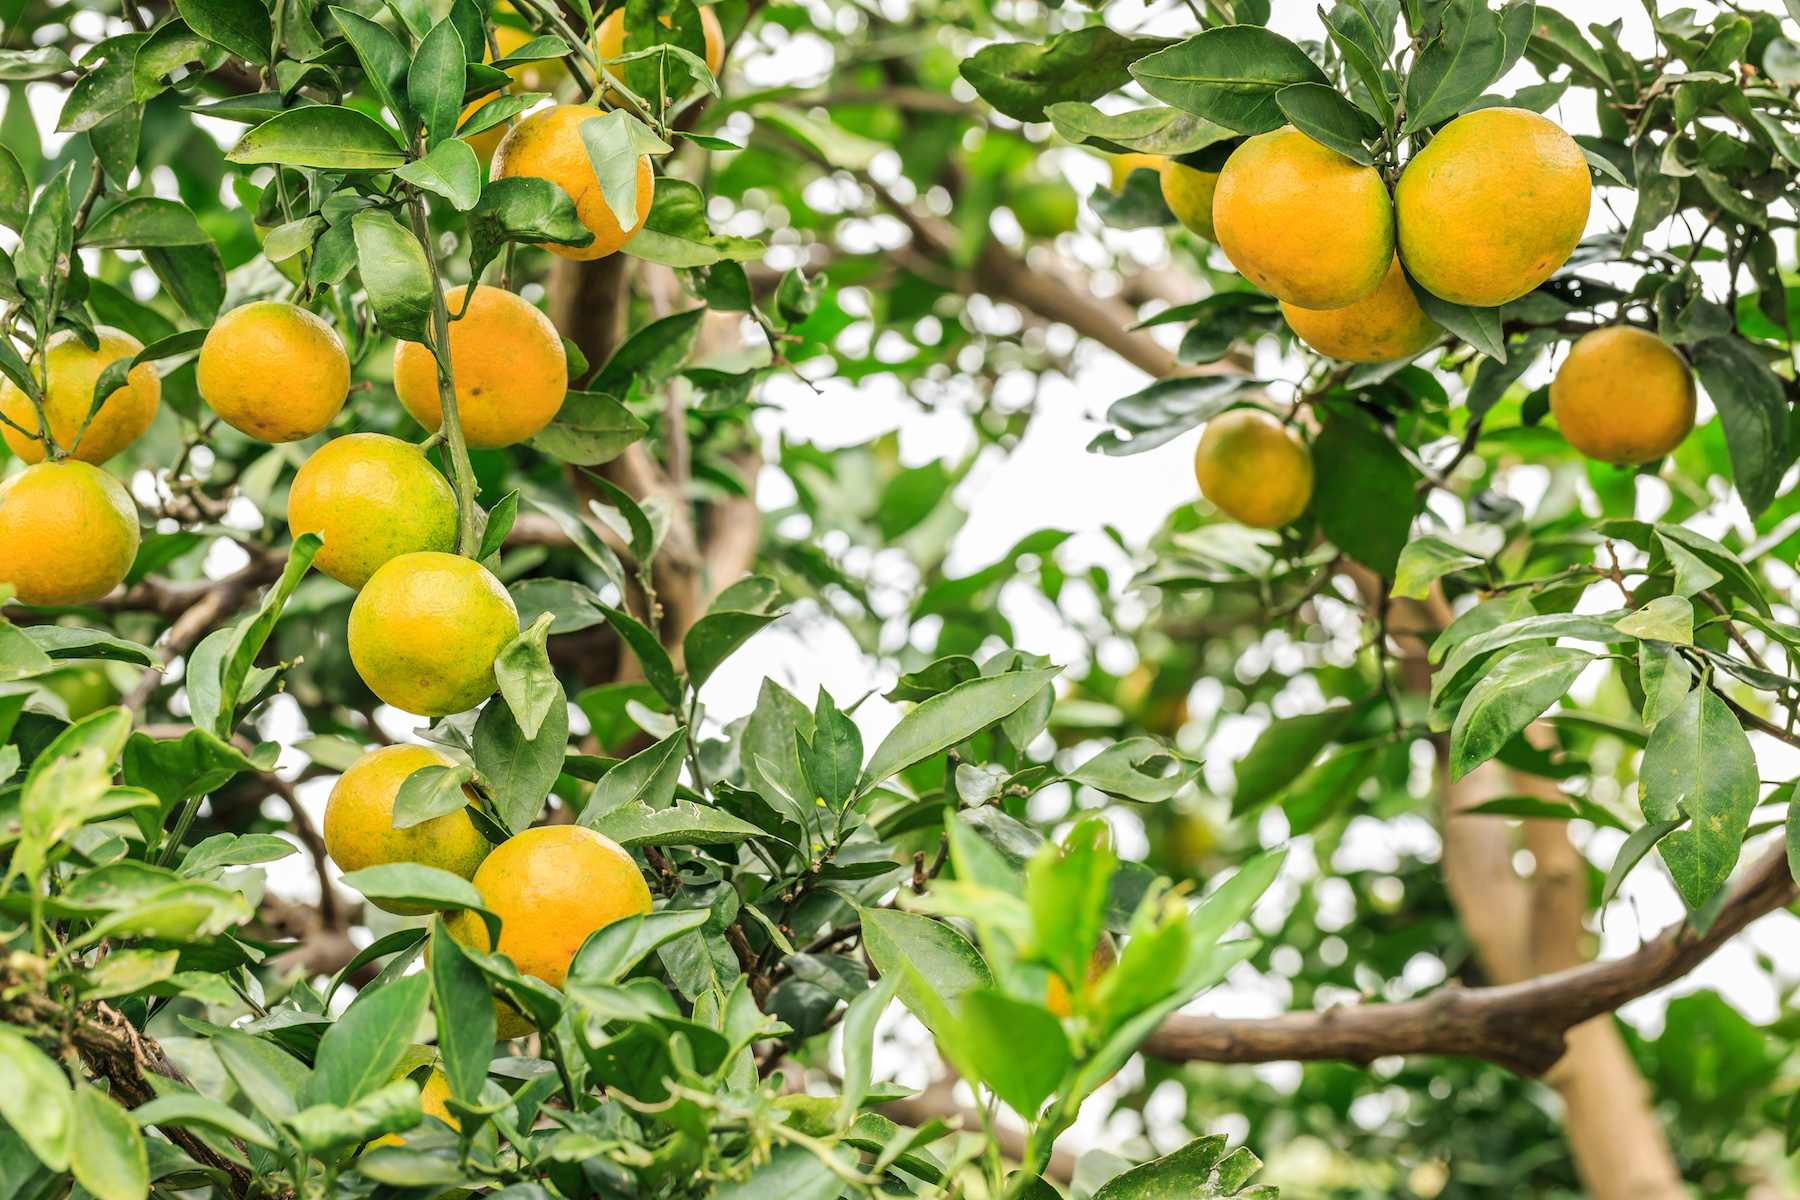 Richard Lyons Nursery no longer sells citrus trees.